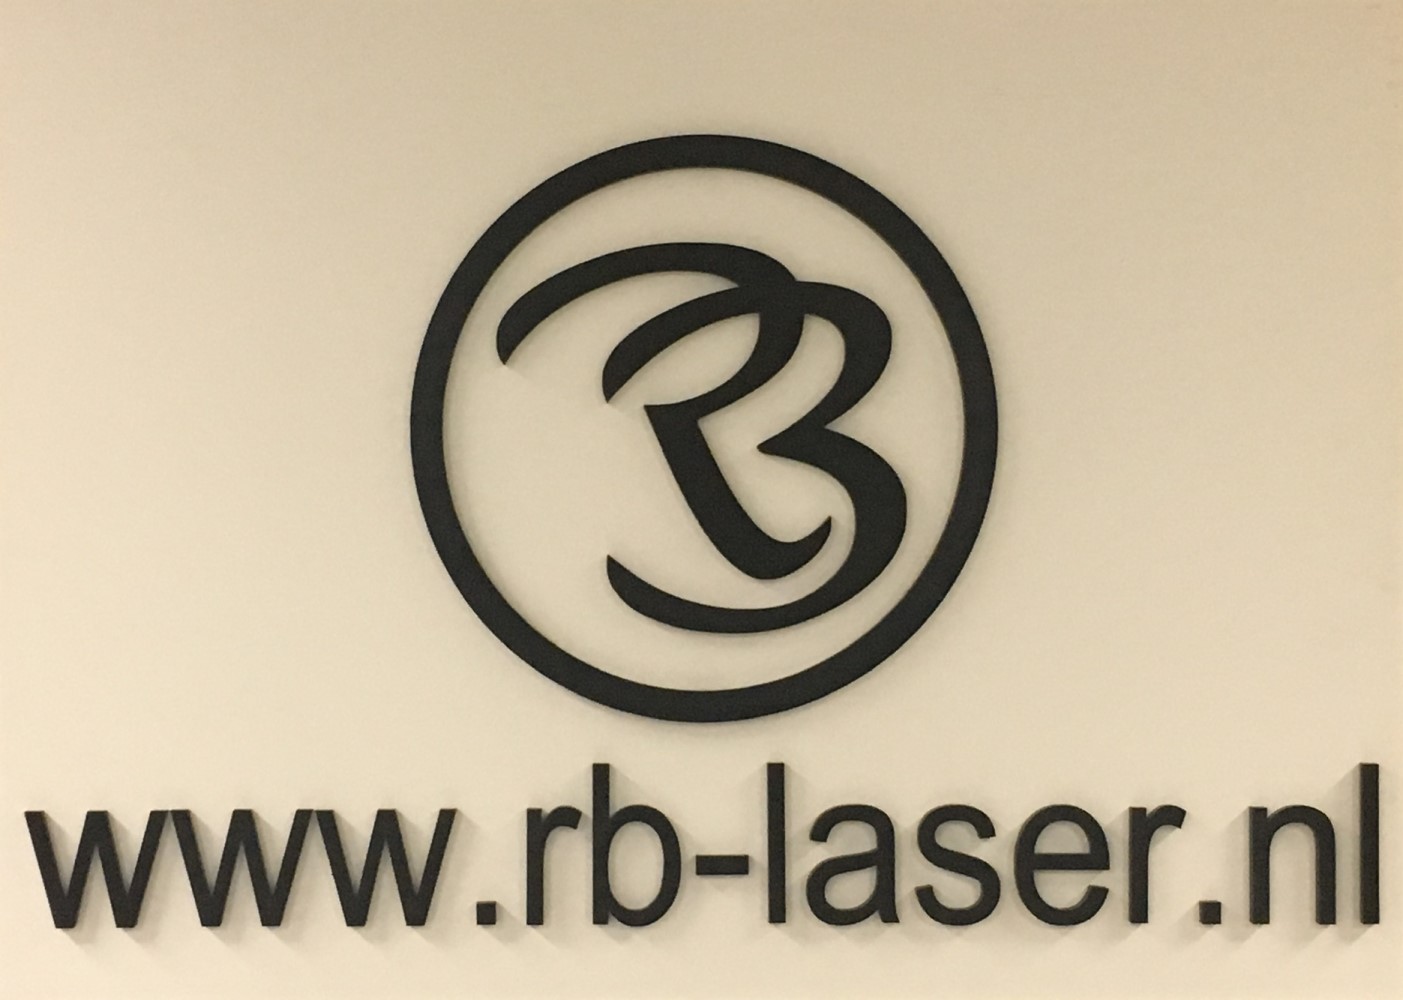 De RB Laser webshop is online!